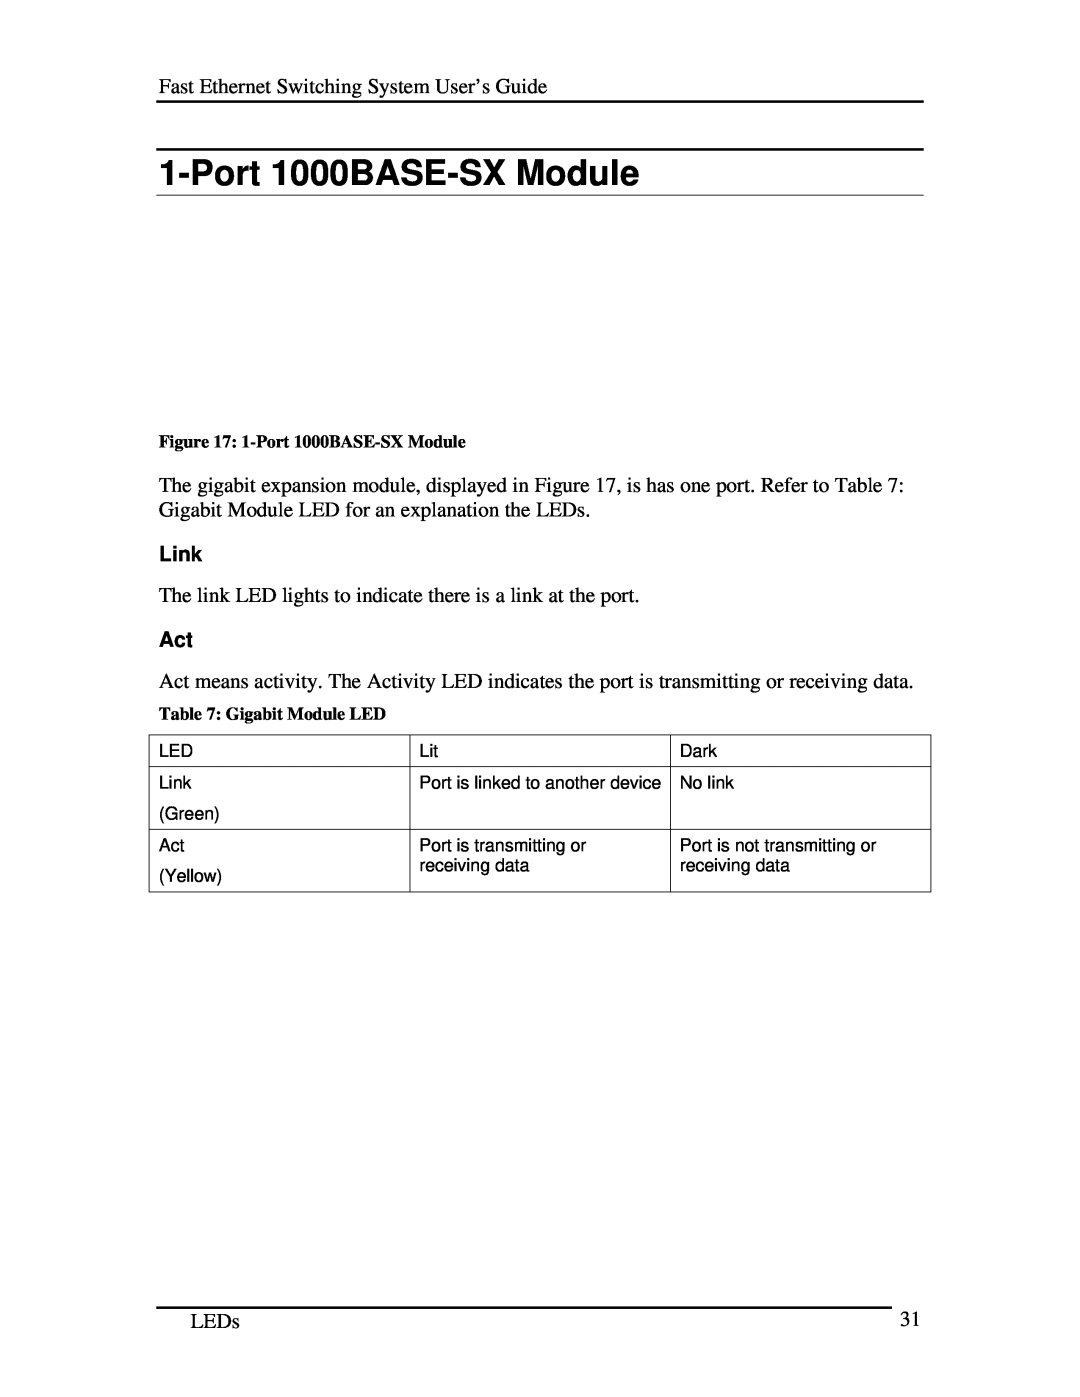 D-Link DES-5016 manual Link, 1-Port 1000BASE-SX Module, Gigabit Module LED 